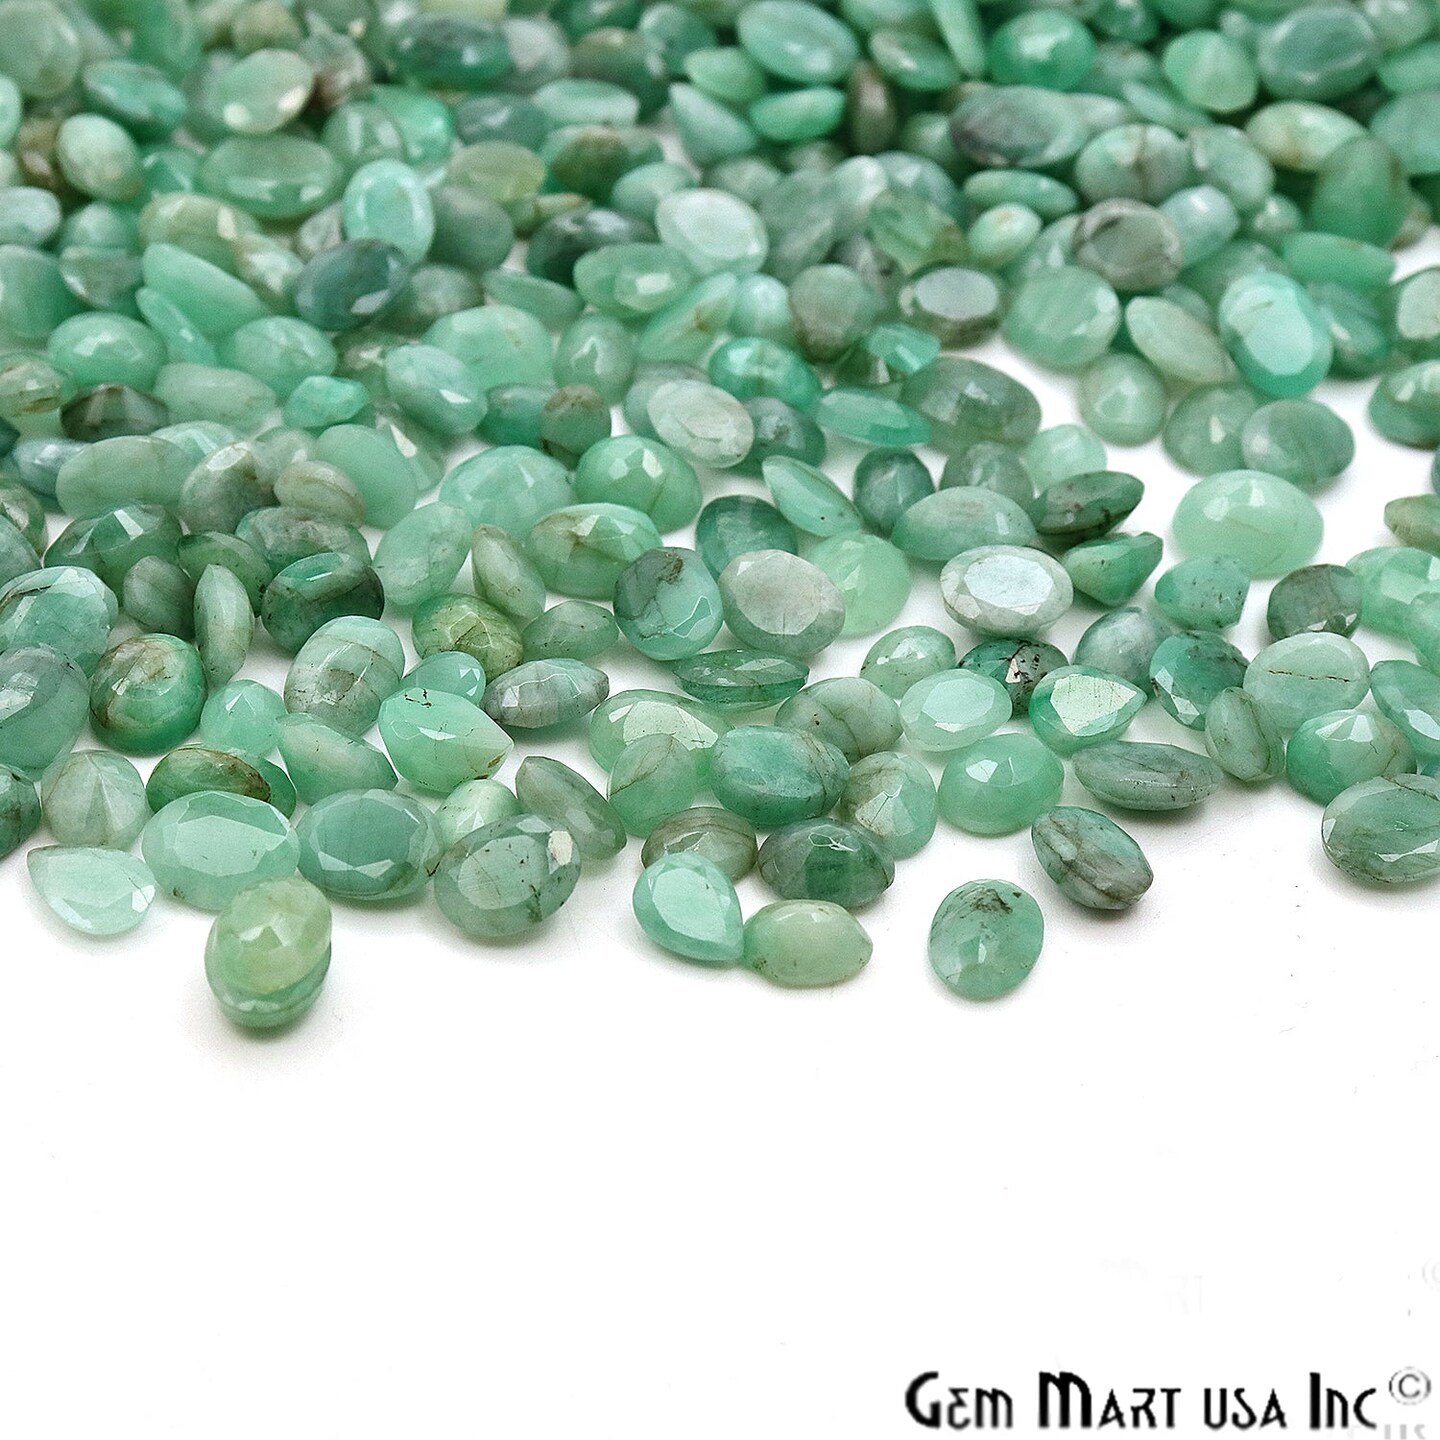 Emerald Oval Gemstone, 6x9mm, 1+ Carats, 100% Natural Faceted Loose Gems, May Birthstone, GemMartUSA (EM-60005)